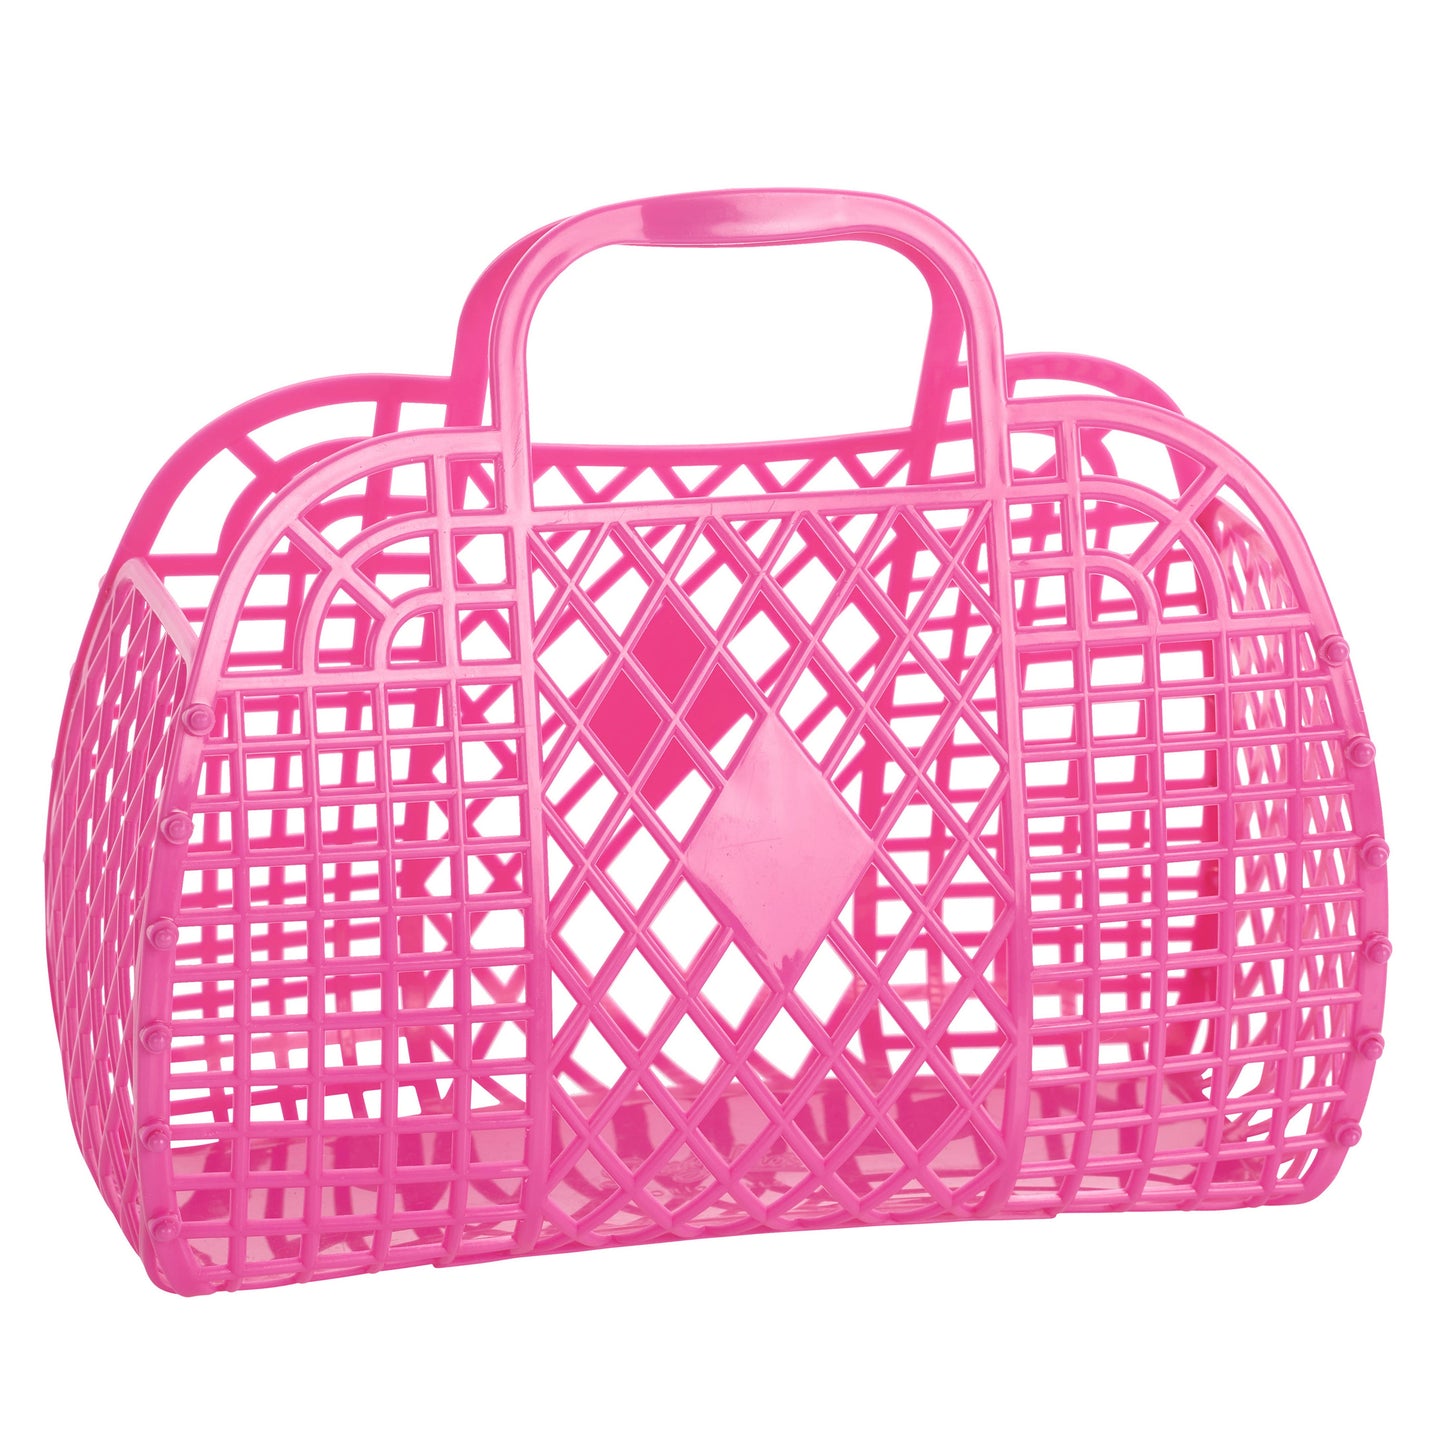 Retro Basket Jelly Bag - Large